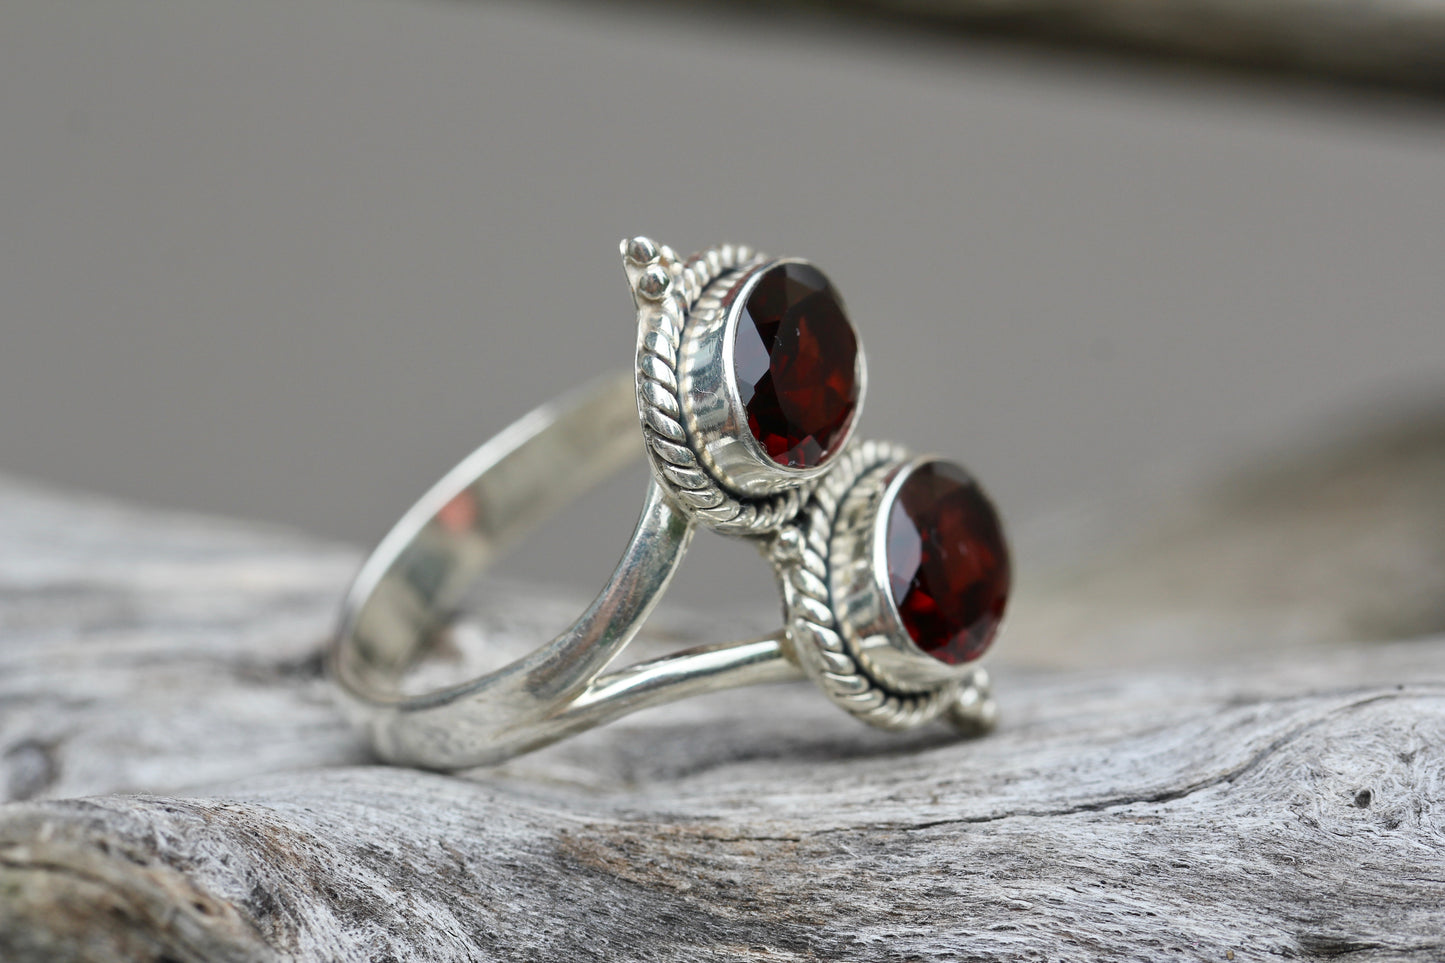 Garnet Two stone garnet ring